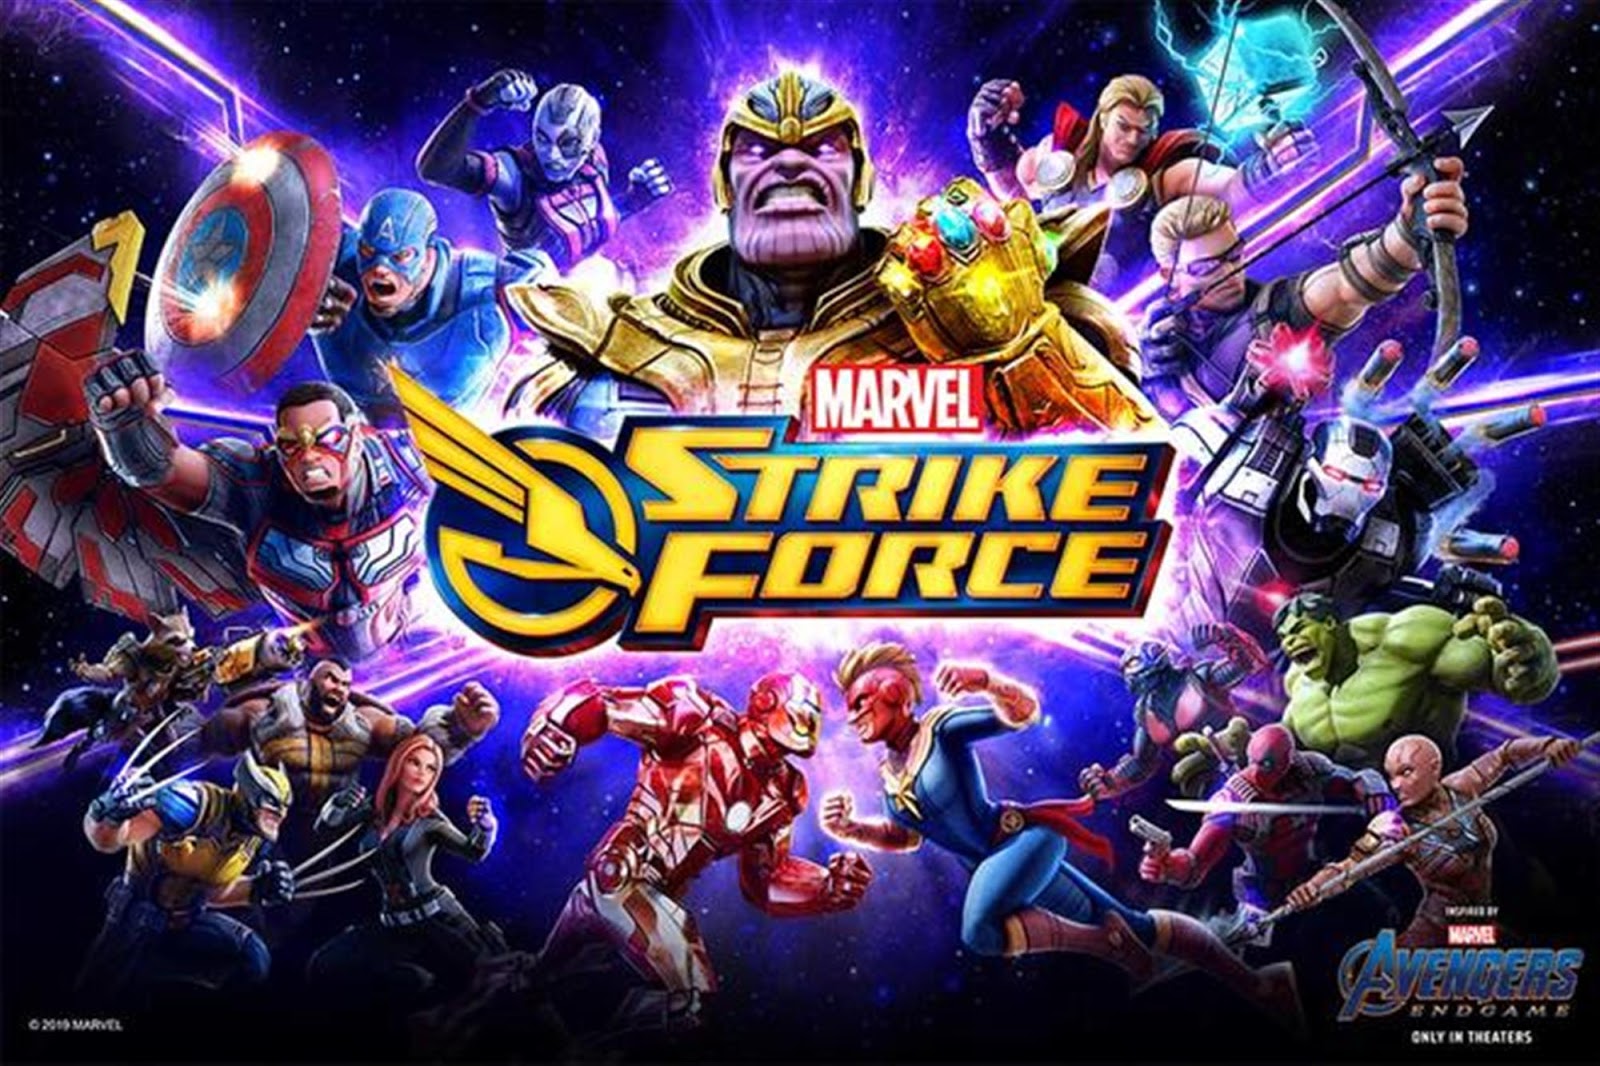 Marvel Strike Force Celebrates Its Fifth Anniversary